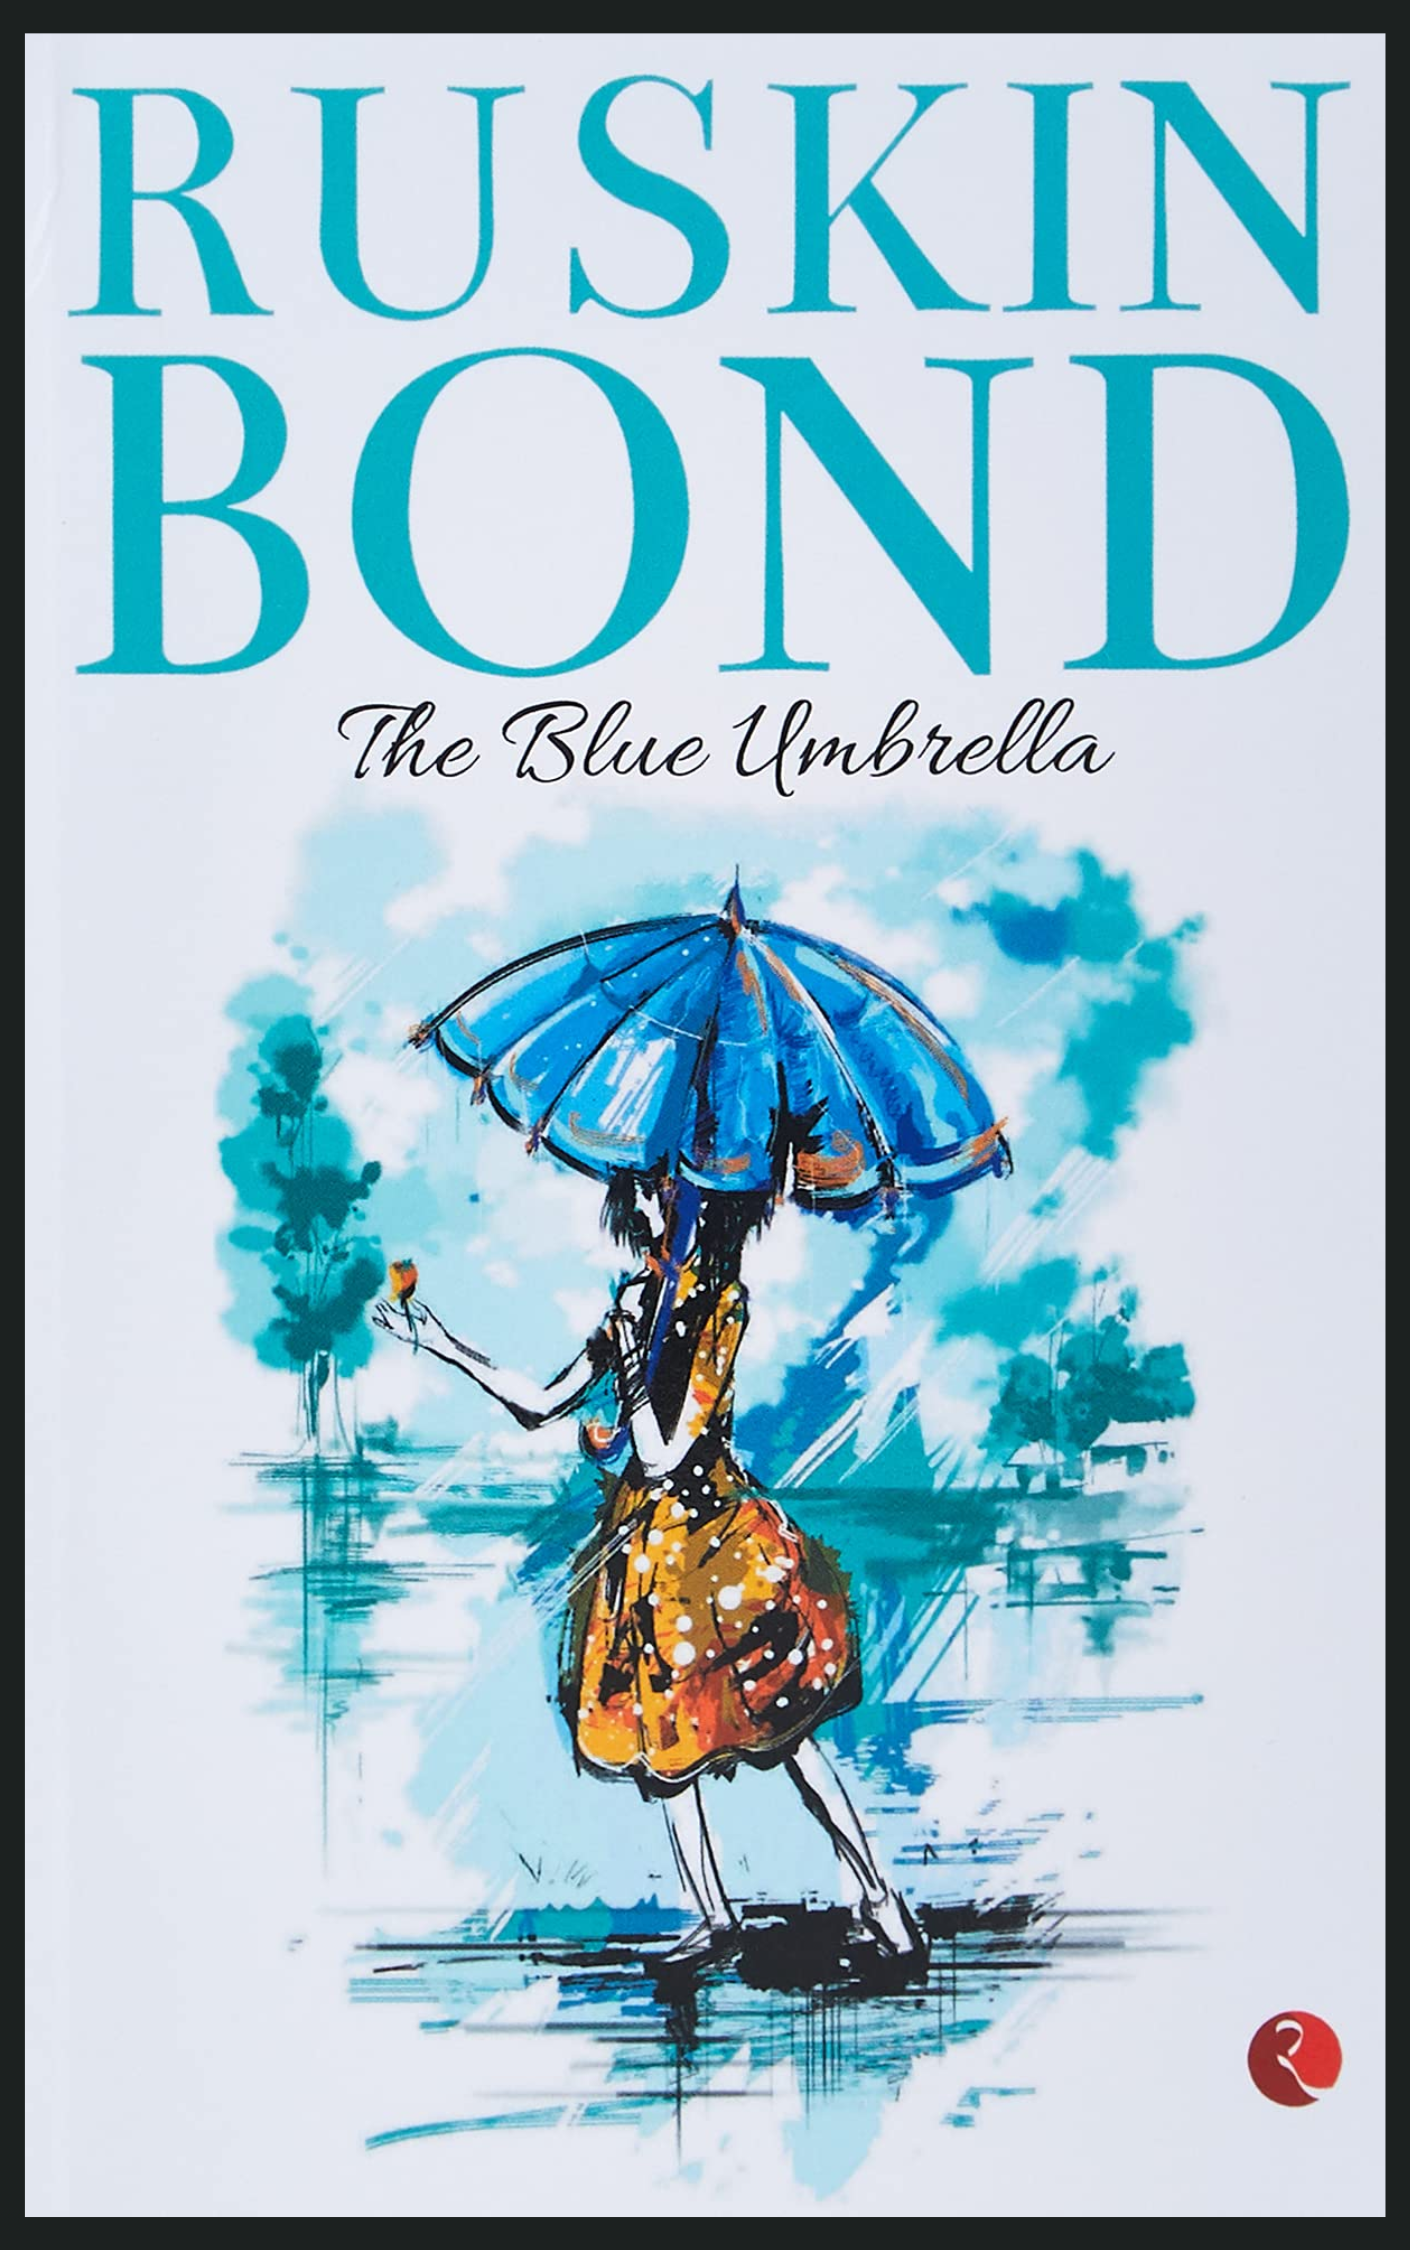 THE BLUE UMBRELLA by RUSKIN BOND